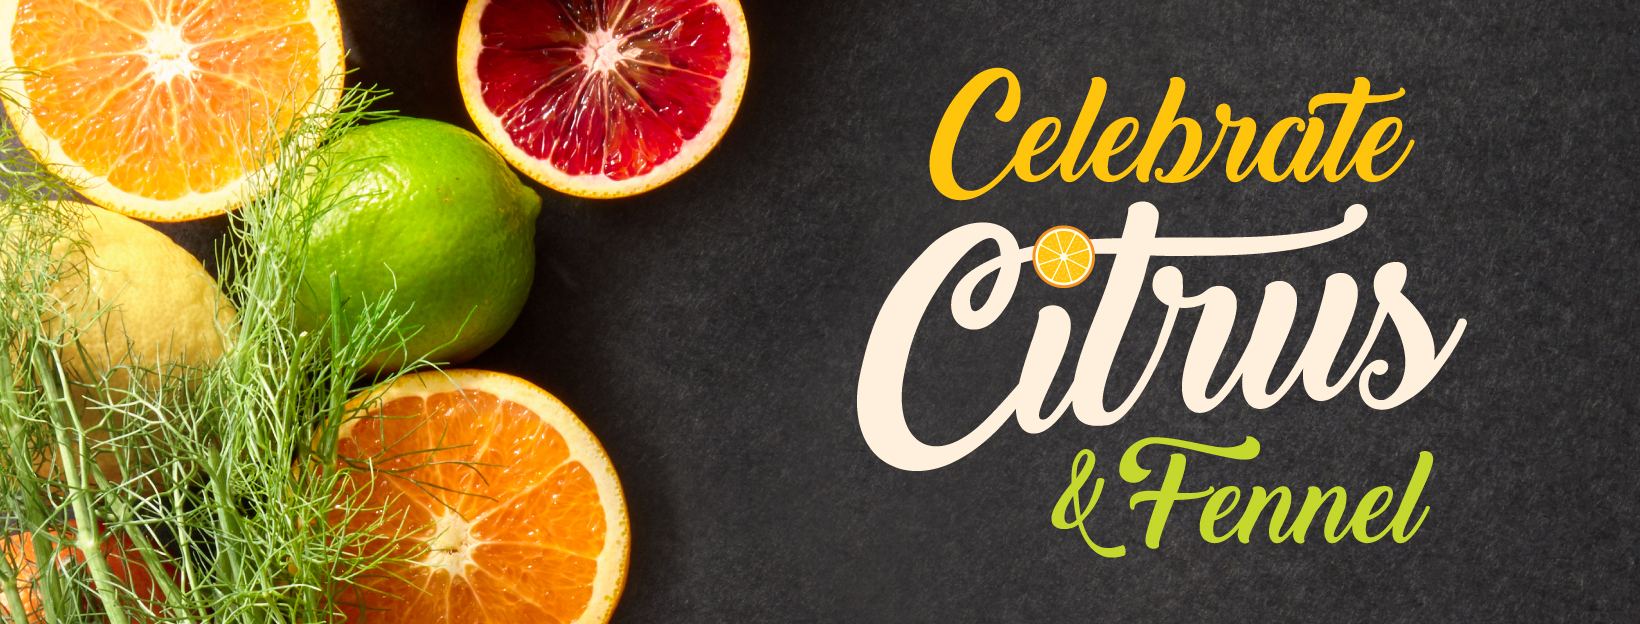 Celebrate Citrus and Fennel